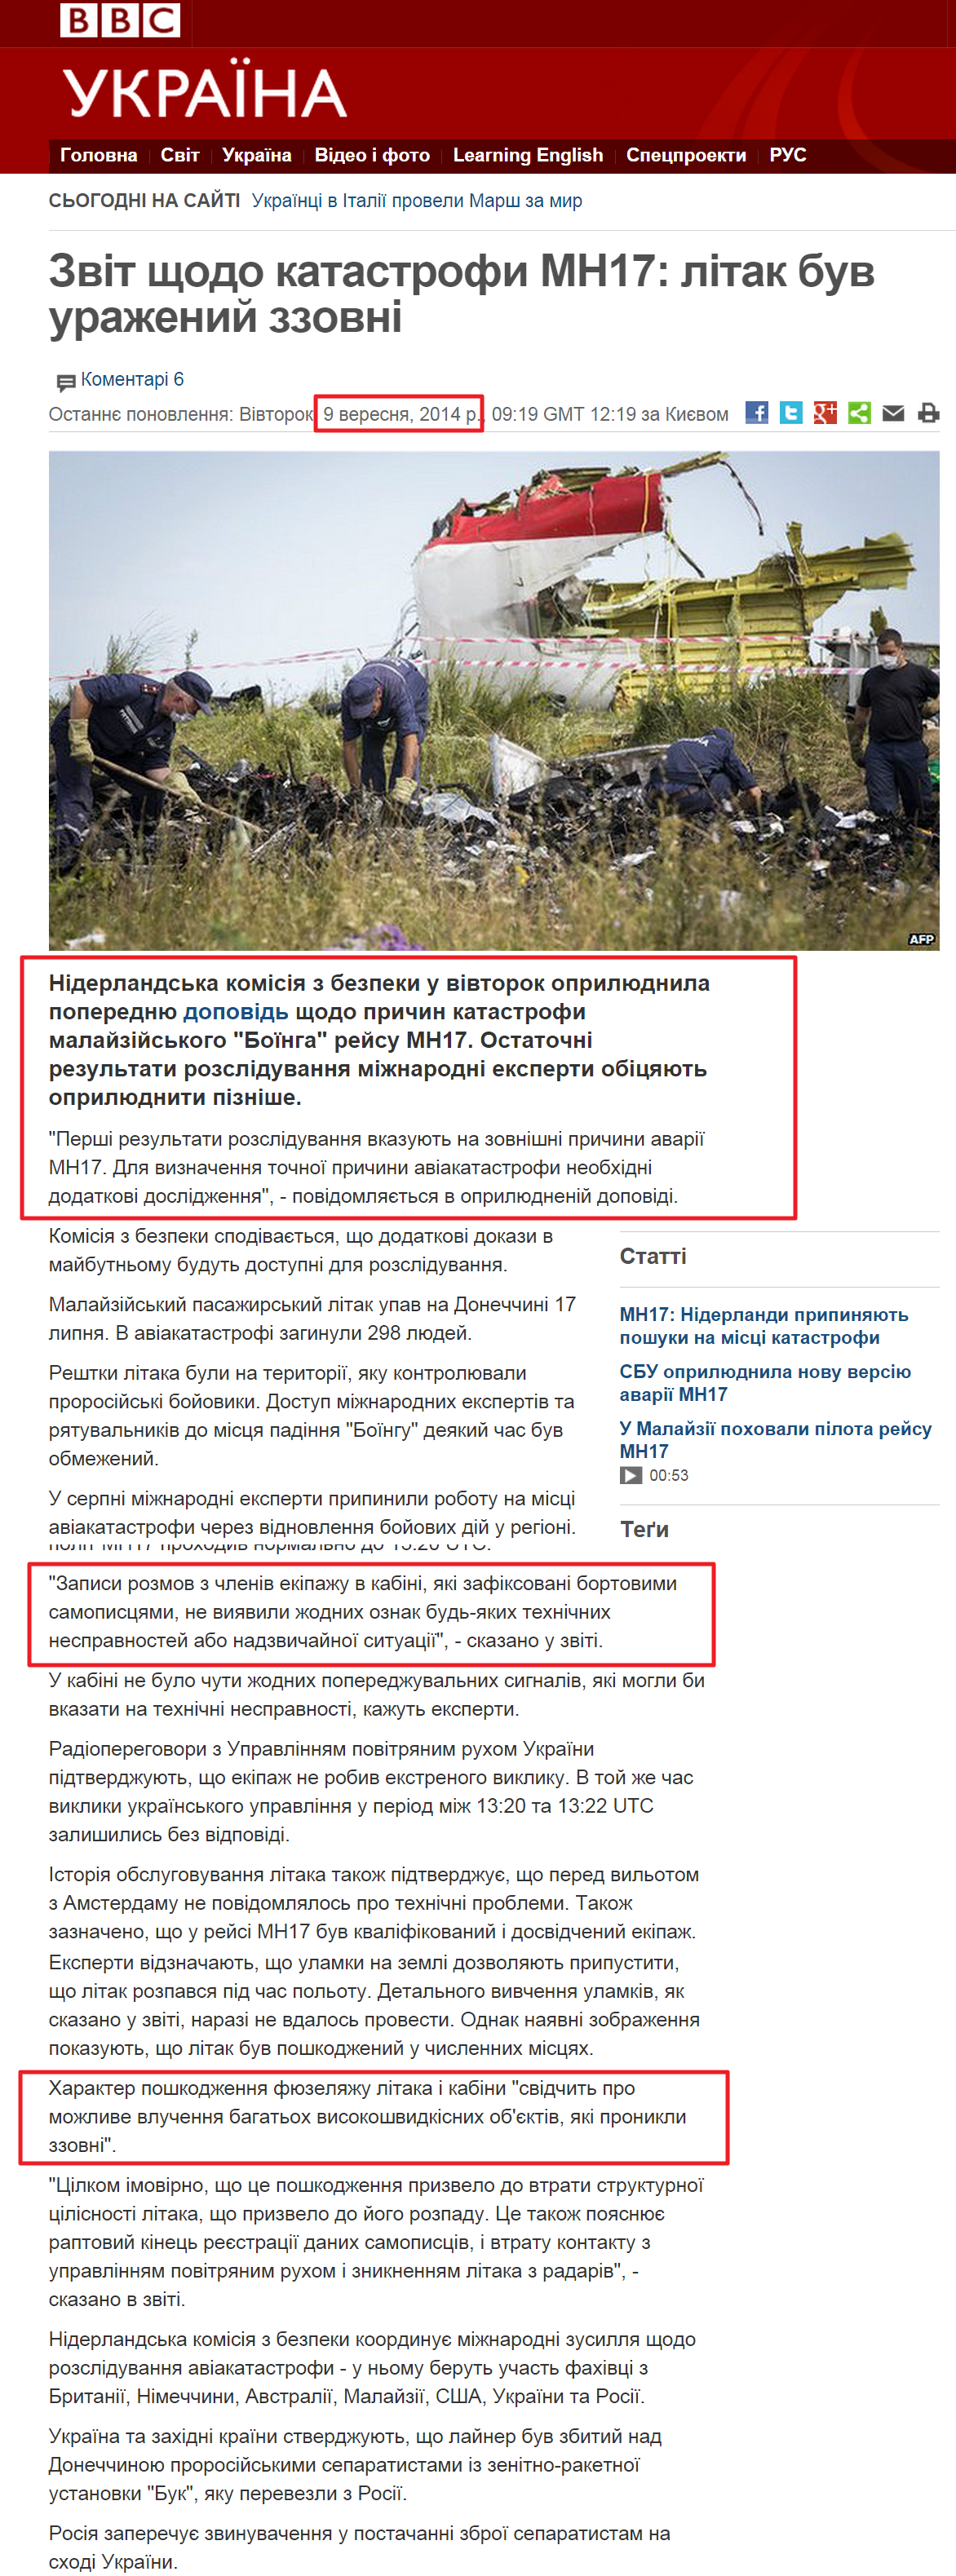 http://www.bbc.co.uk/ukrainian/politics/2014/09/140909_mh17_crash_dutch_report_zsh.shtml